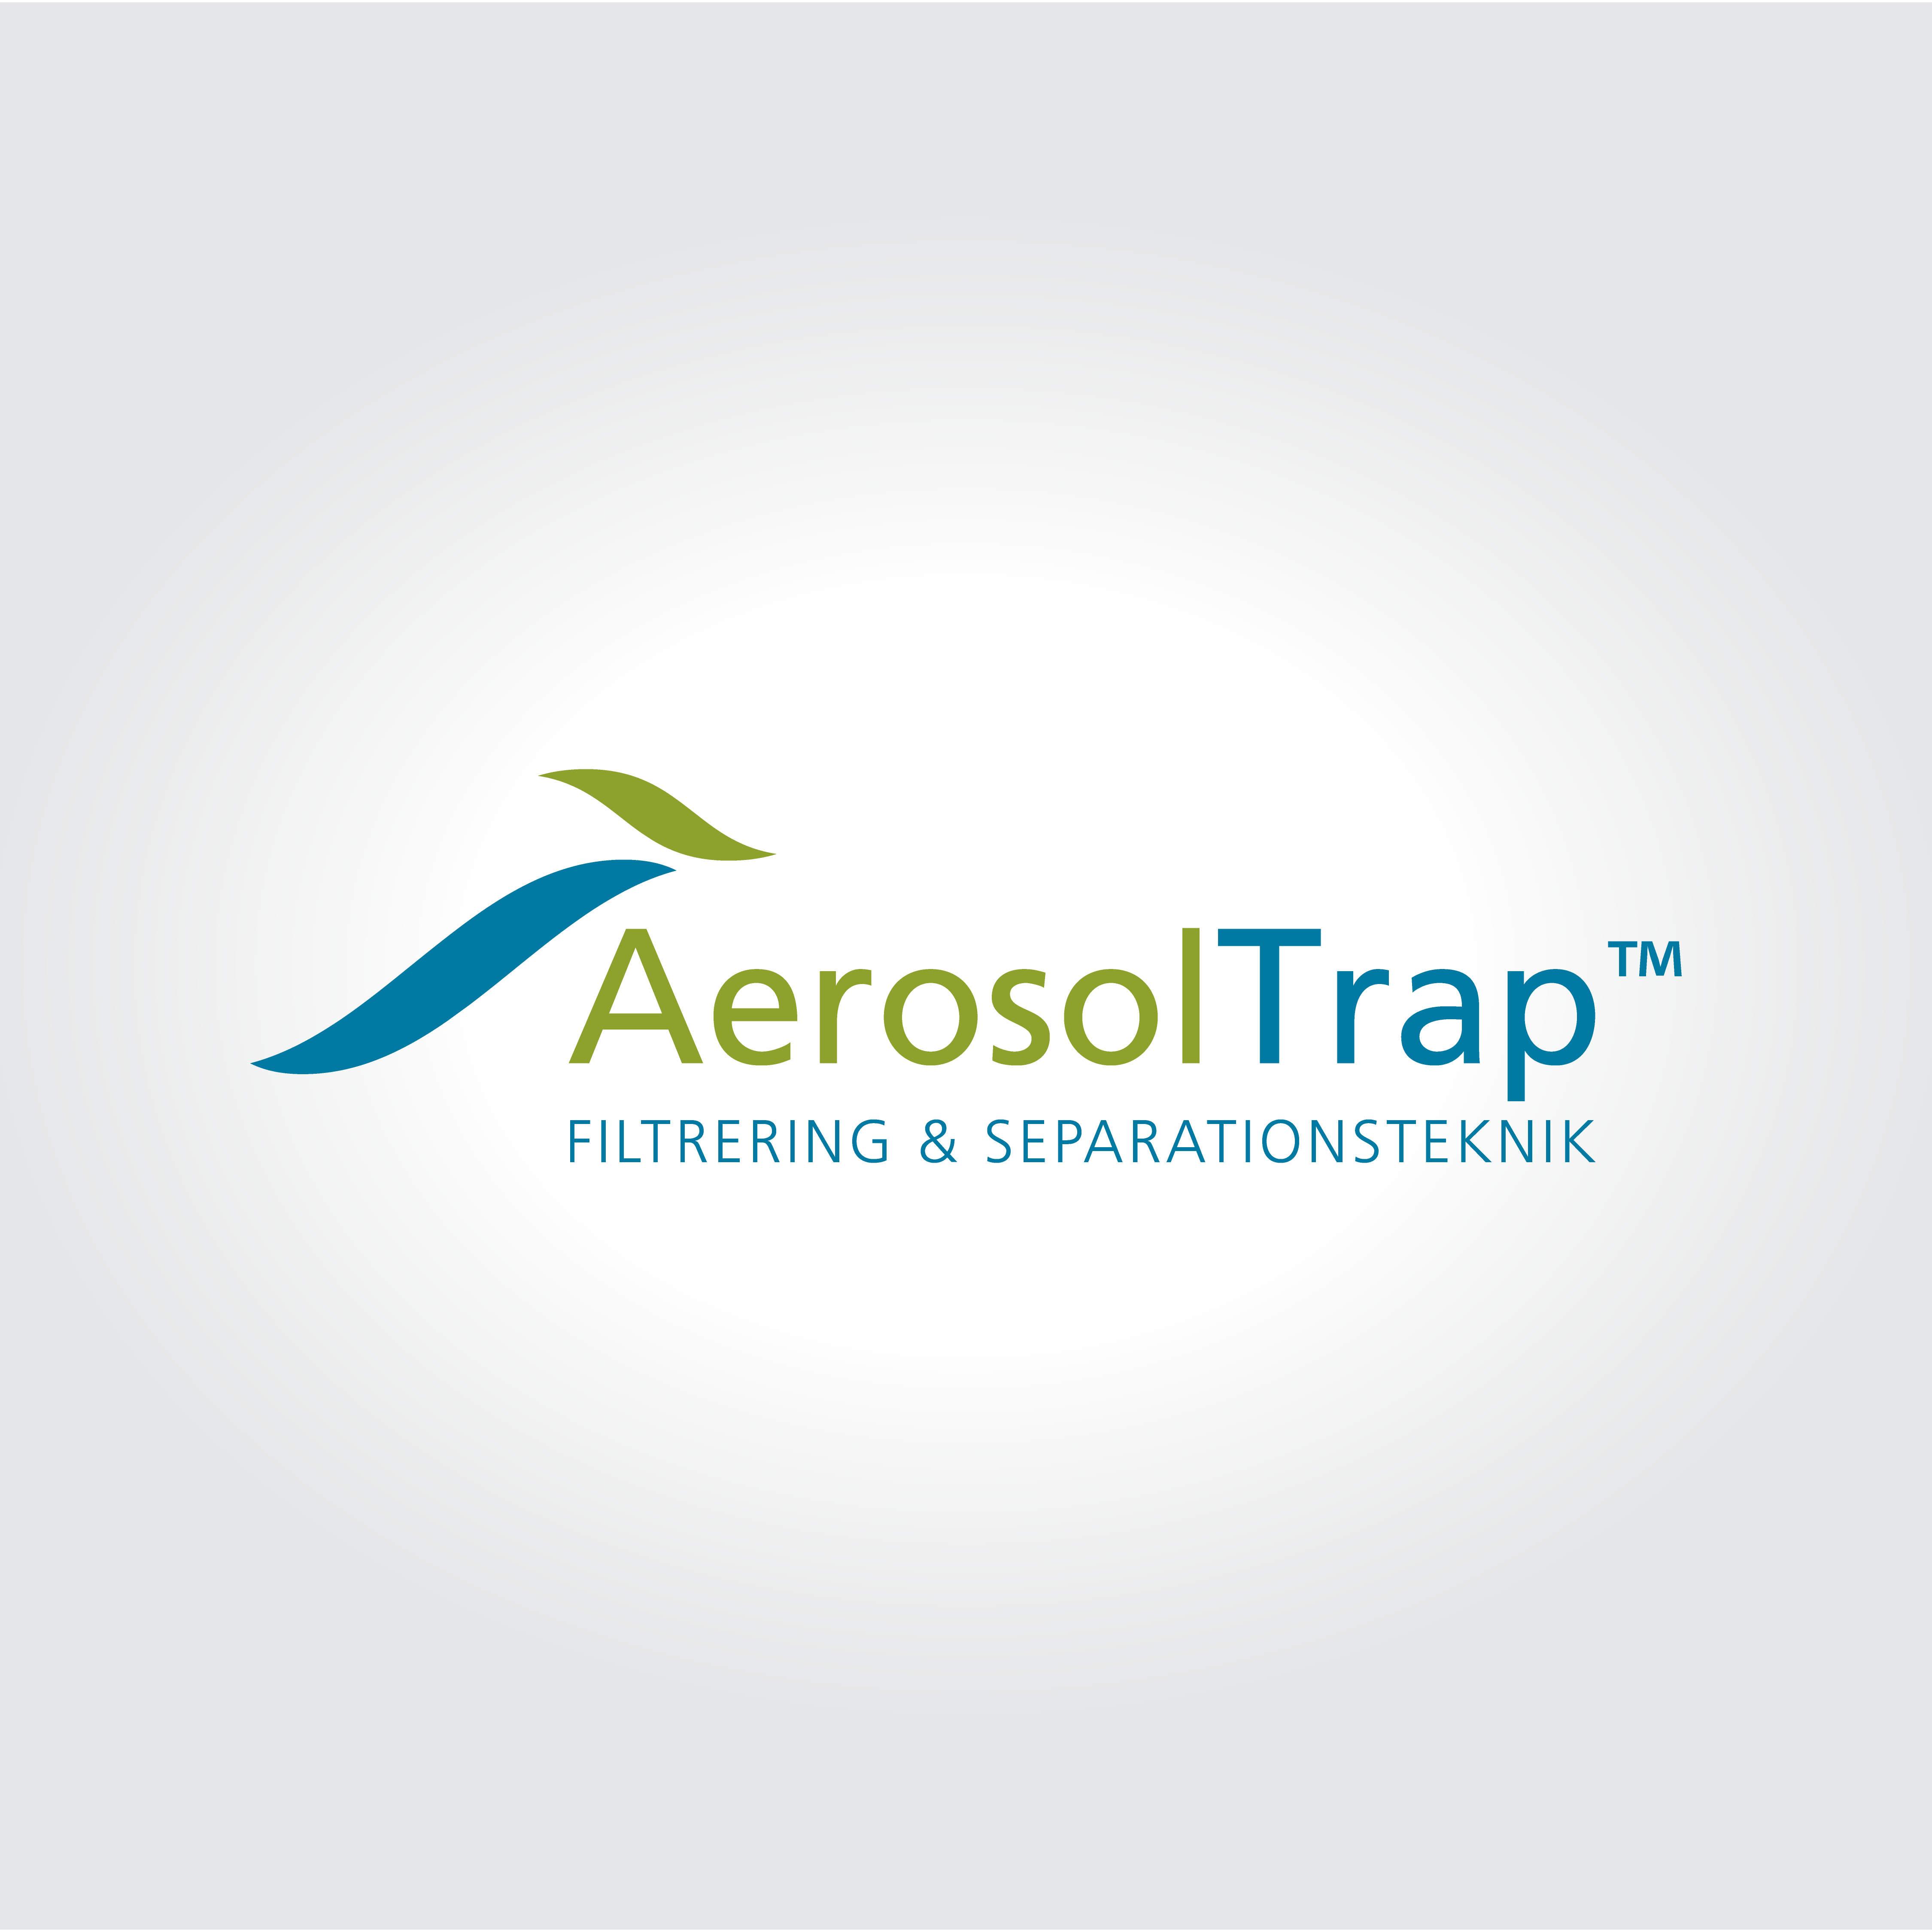 AerosolTrap